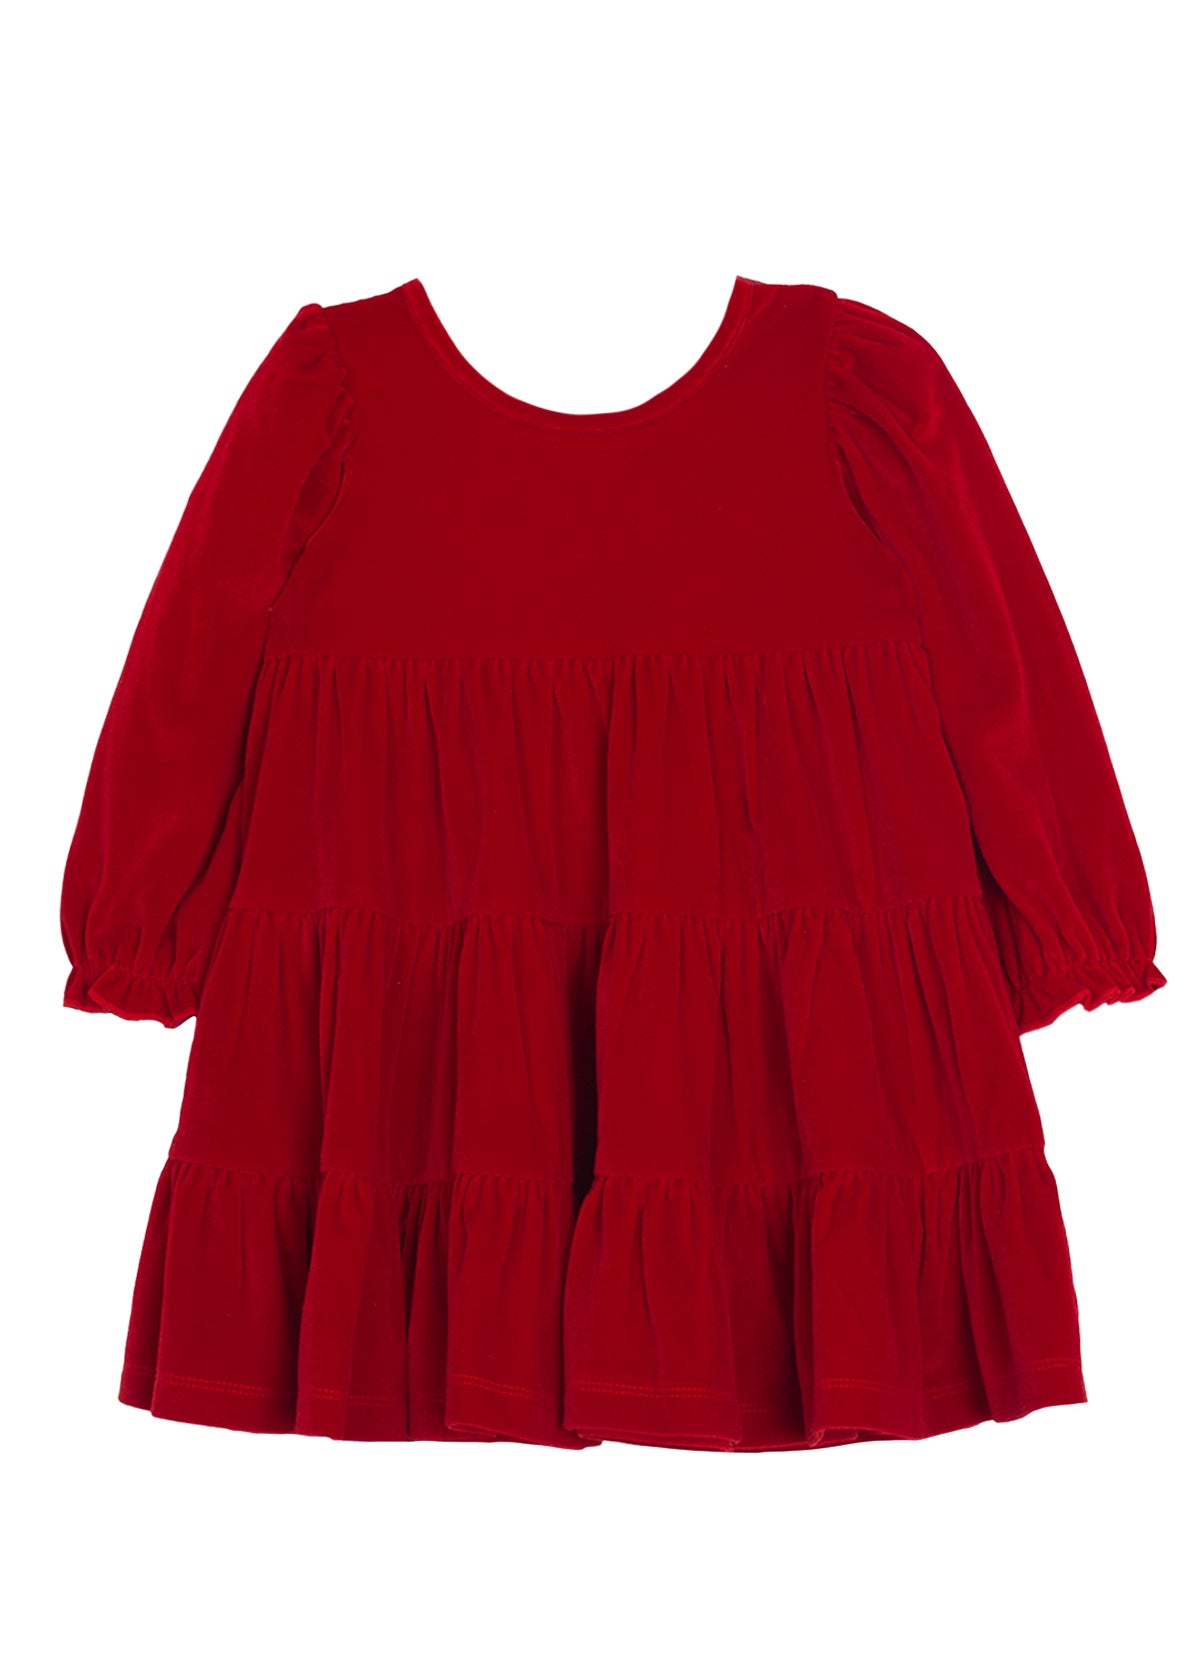 Childrens Boutique NJ - Kids Red Dress